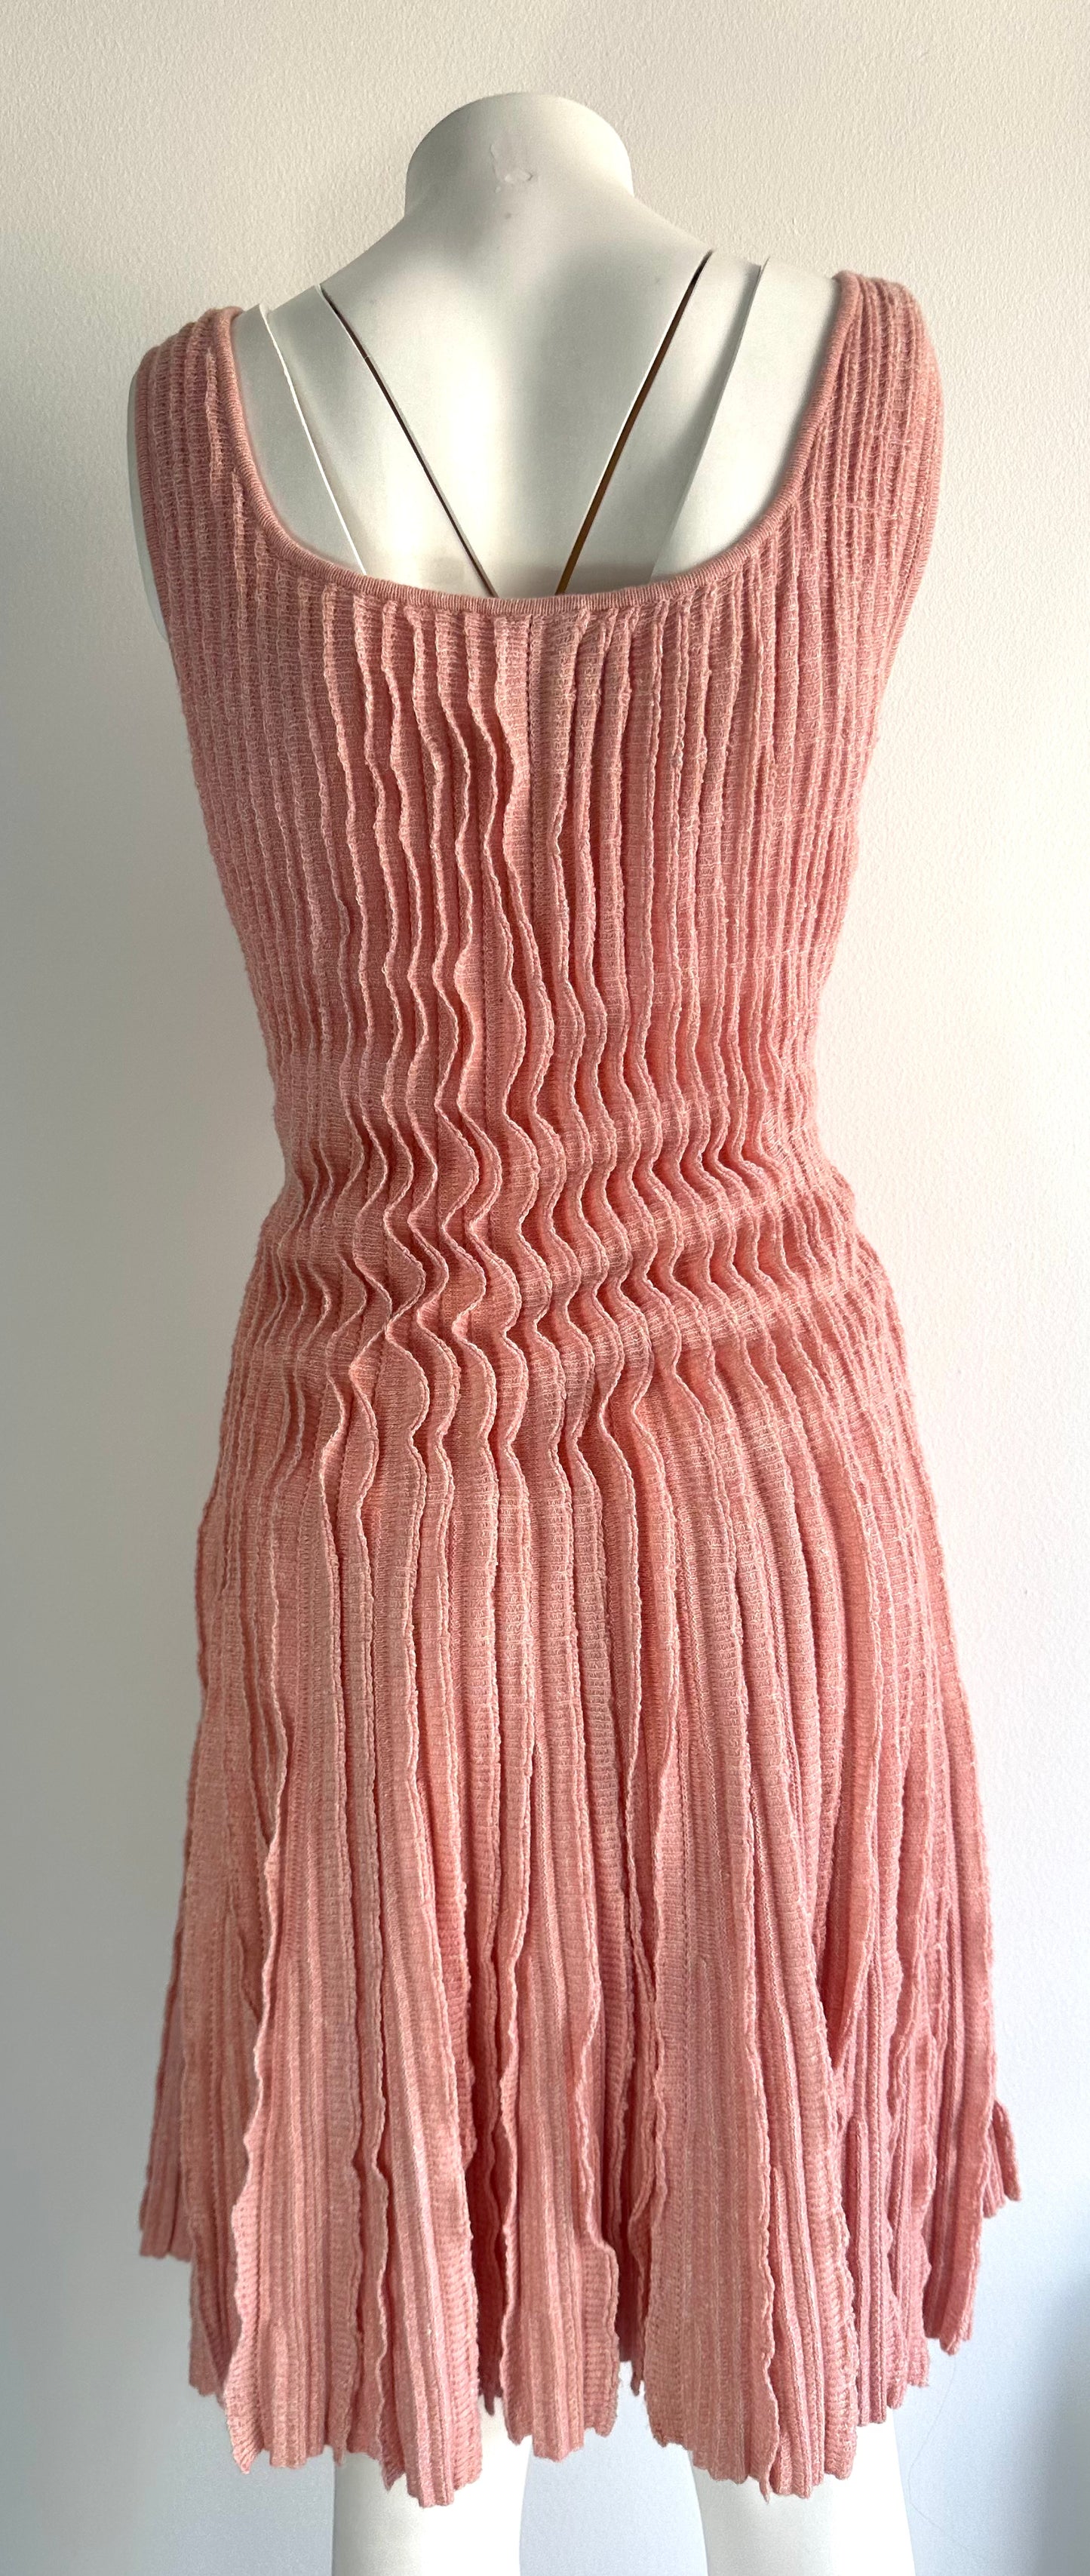 CHANEL - Mini dress pink size 36 FR